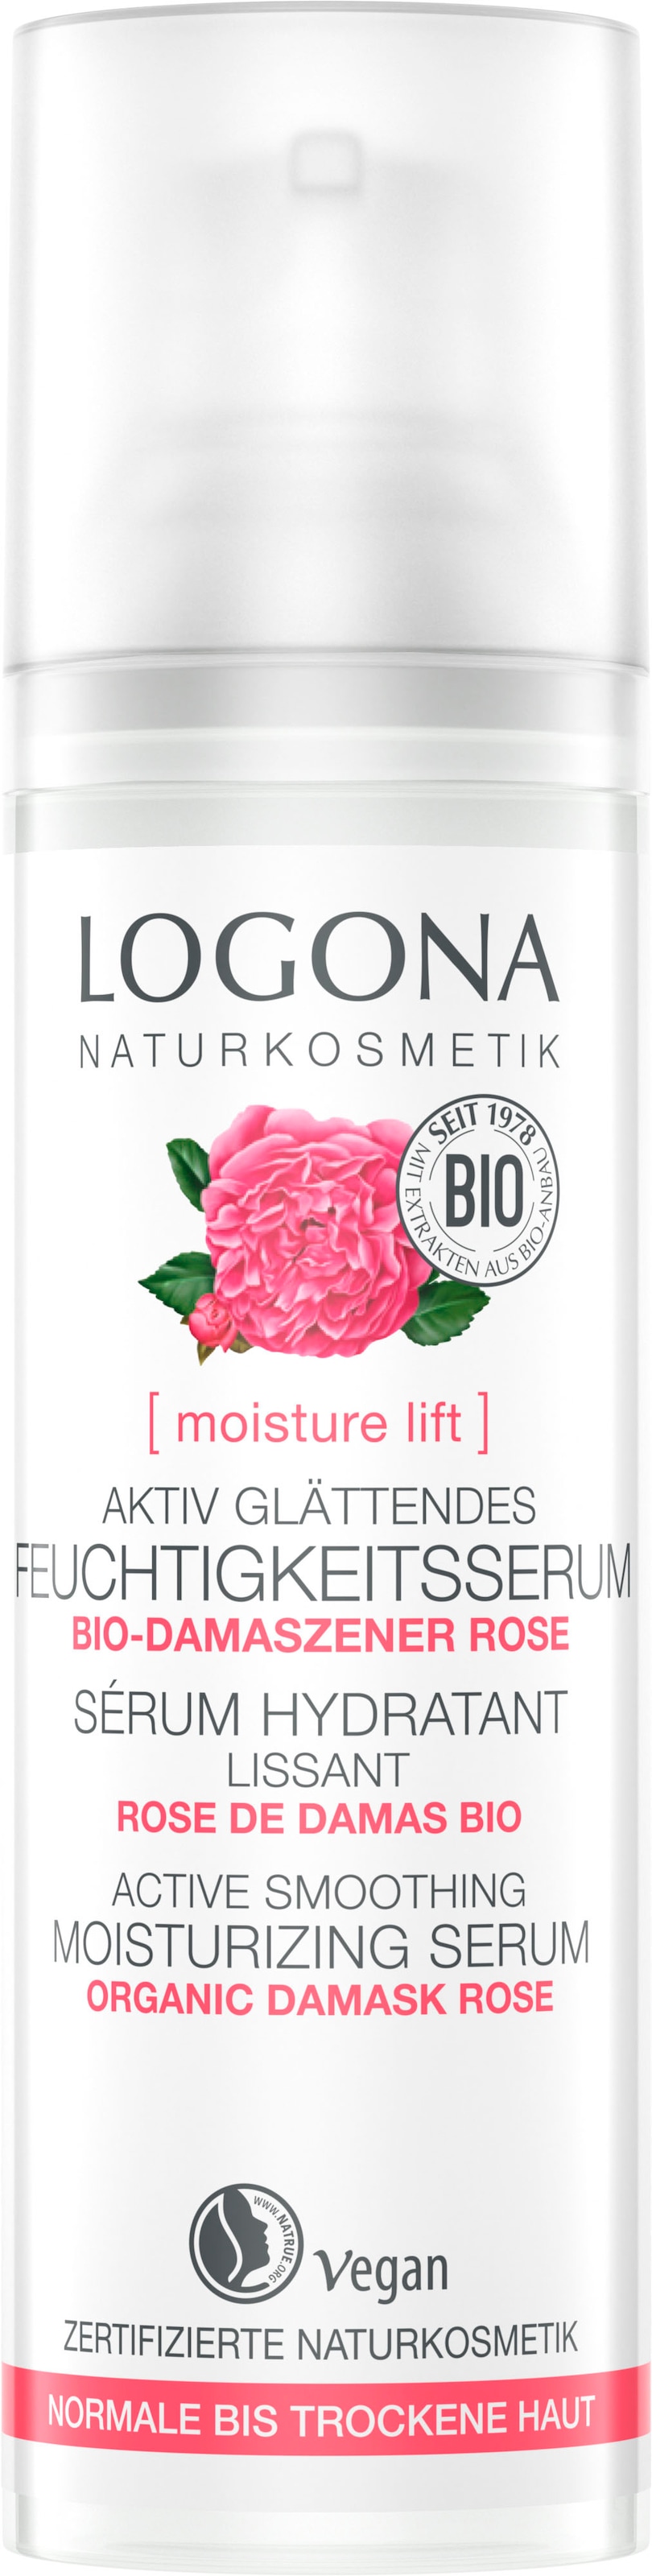 LOGONA Gesichtsserum »Logona lift Feuchtigk.serum« bei ♕ glätt moisture